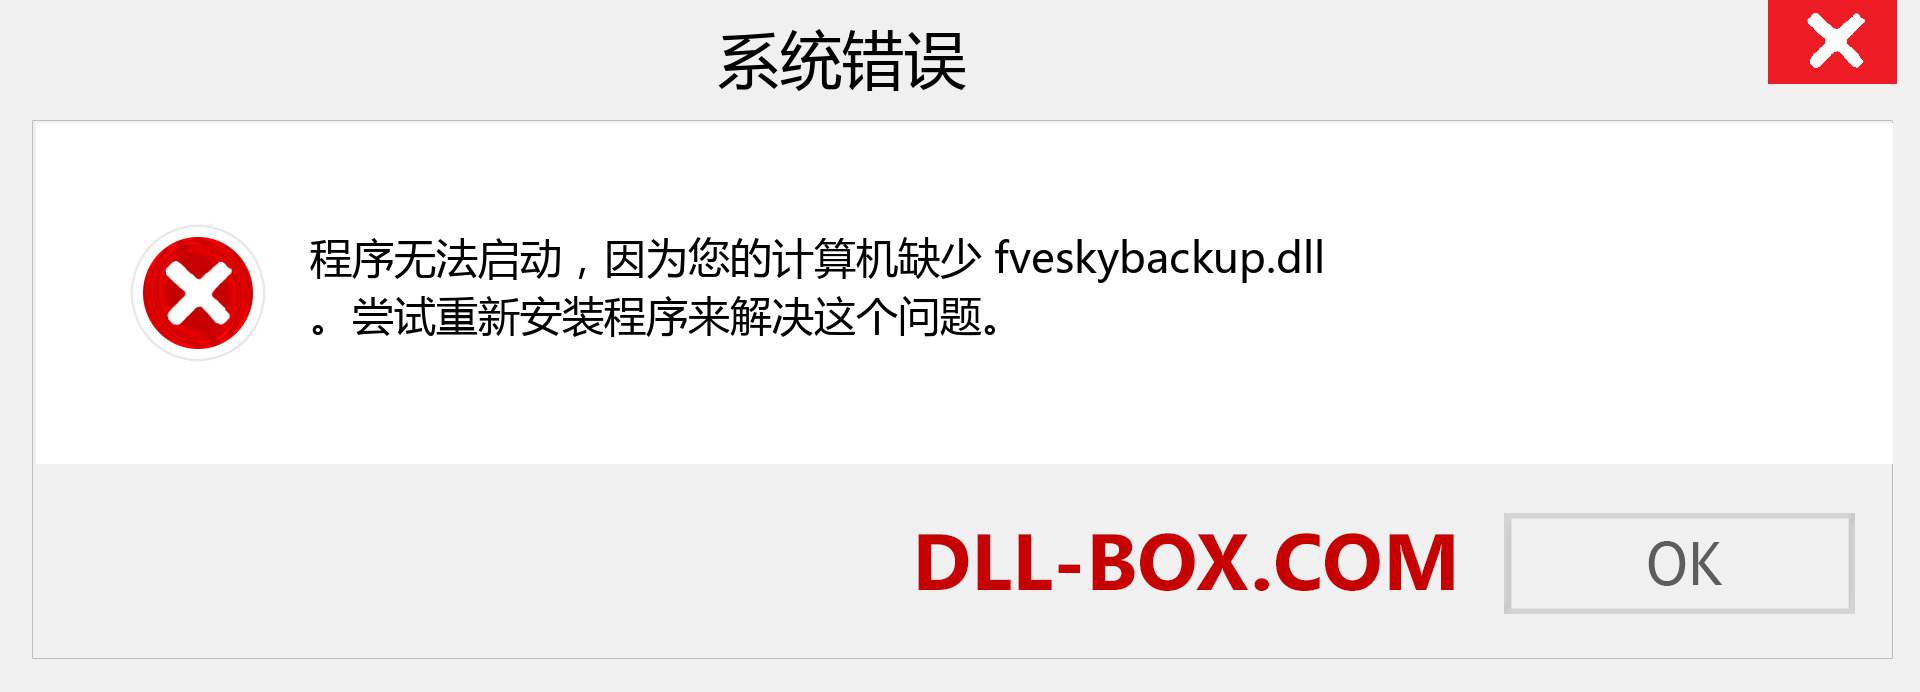 fveskybackup.dll 文件丢失？。 适用于 Windows 7、8、10 的下载 - 修复 Windows、照片、图像上的 fveskybackup dll 丢失错误